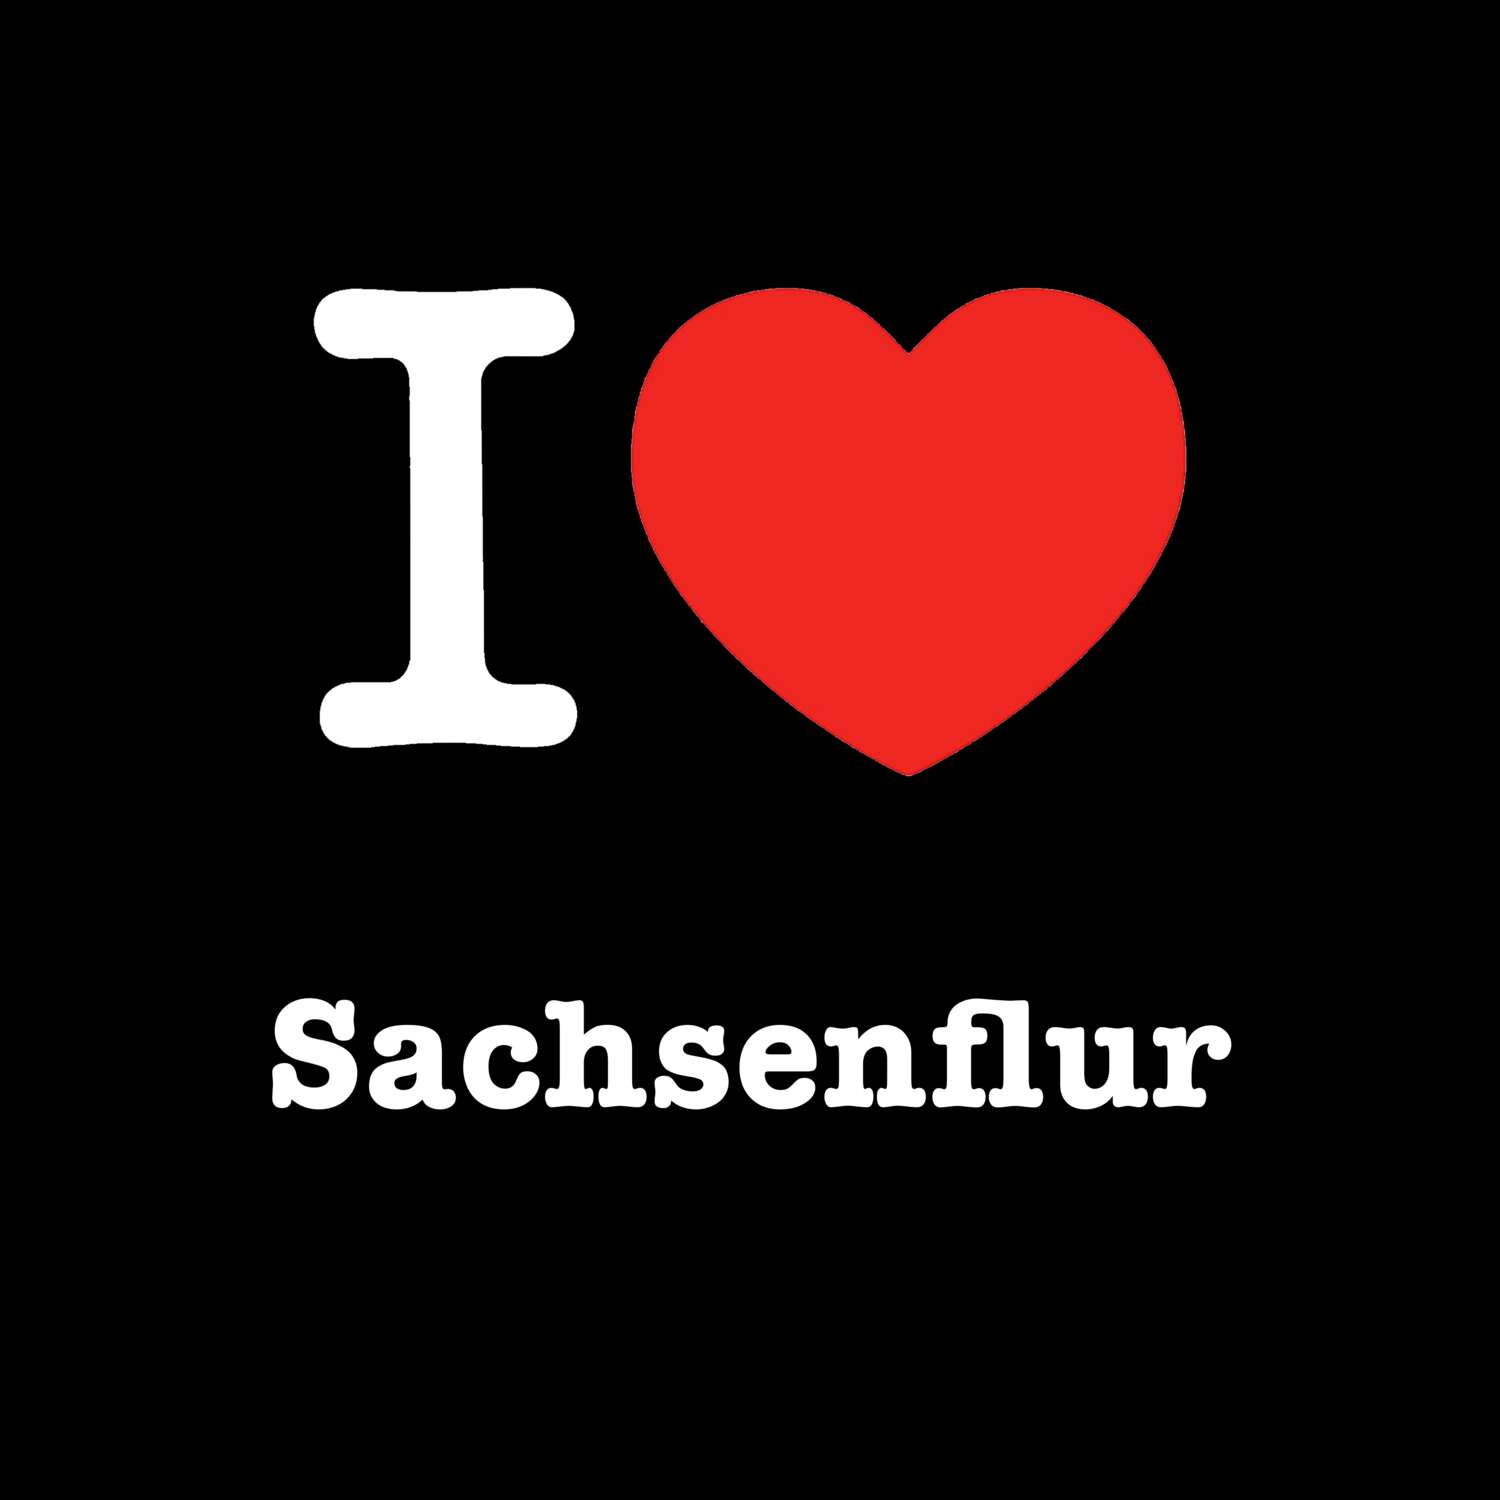 Sachsenflur T-Shirt »I love«